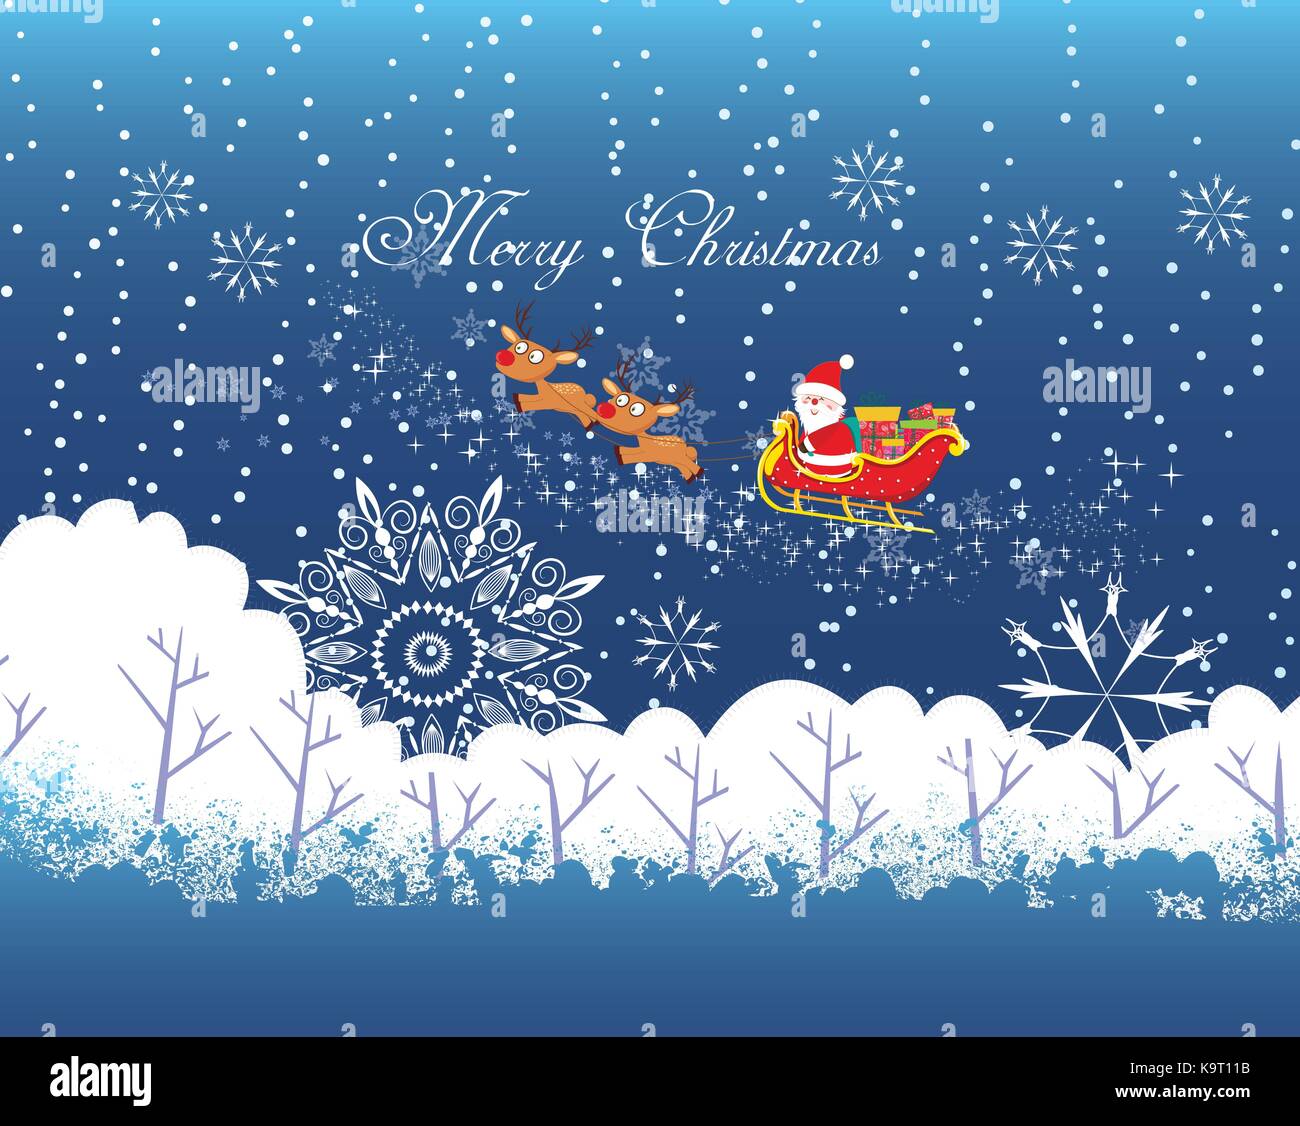 Christmas Card with Santa Claus Stock Vector